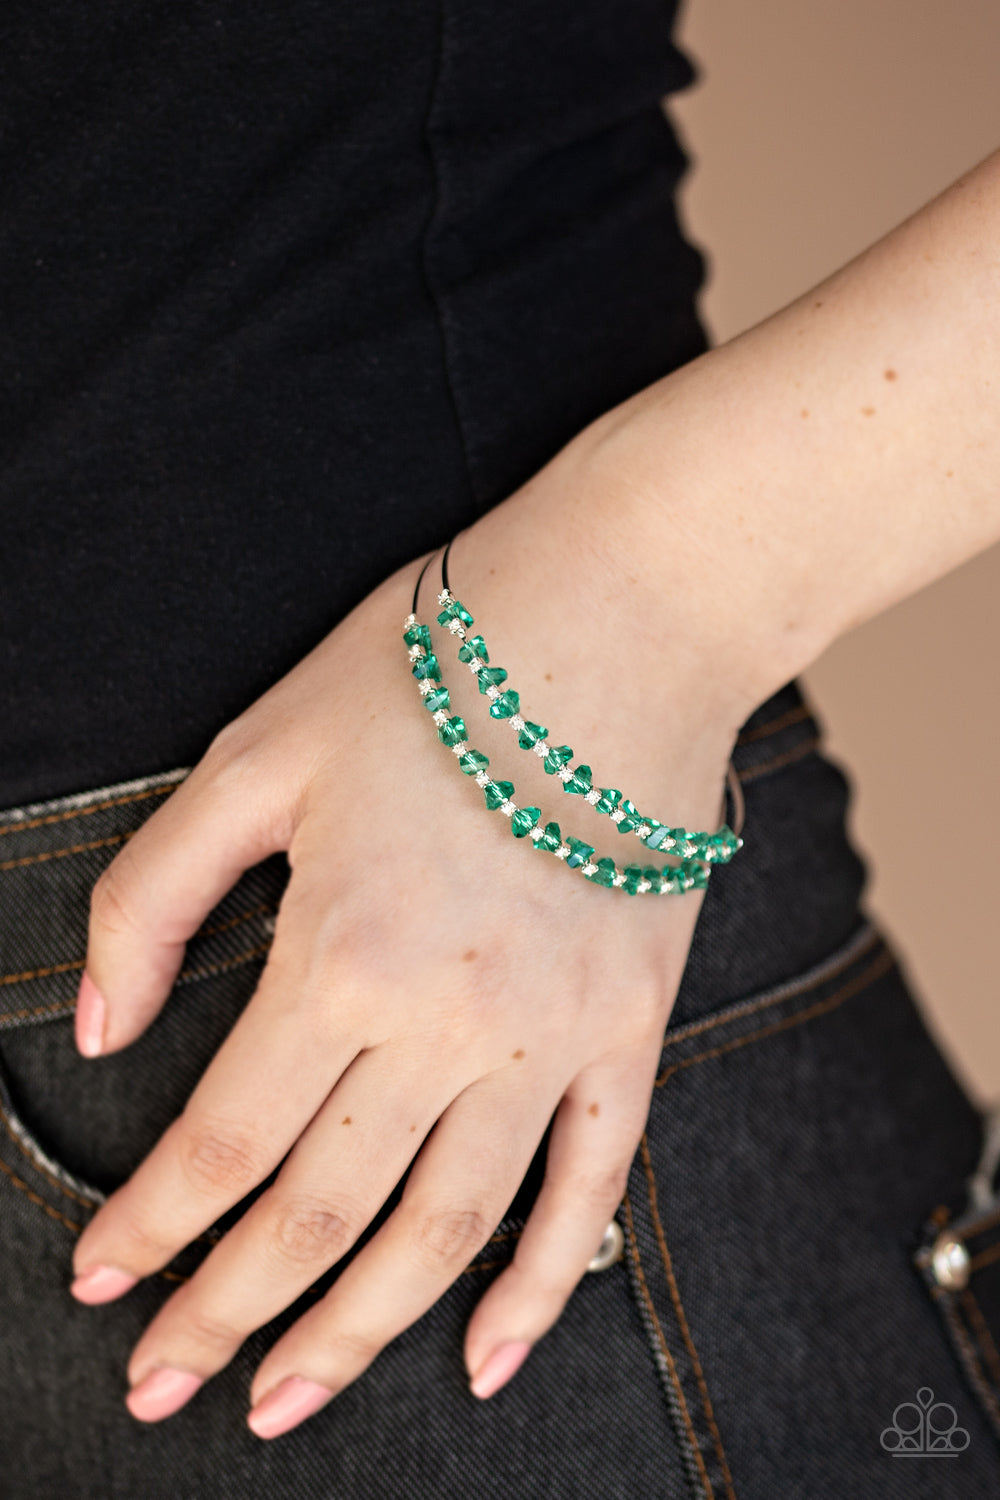 Paparazzi Prismatic Posh - GREEN - Faceted Beads - White Rhinestones - Cuff Bracelet - $5 Jewelry with Ashley Swint